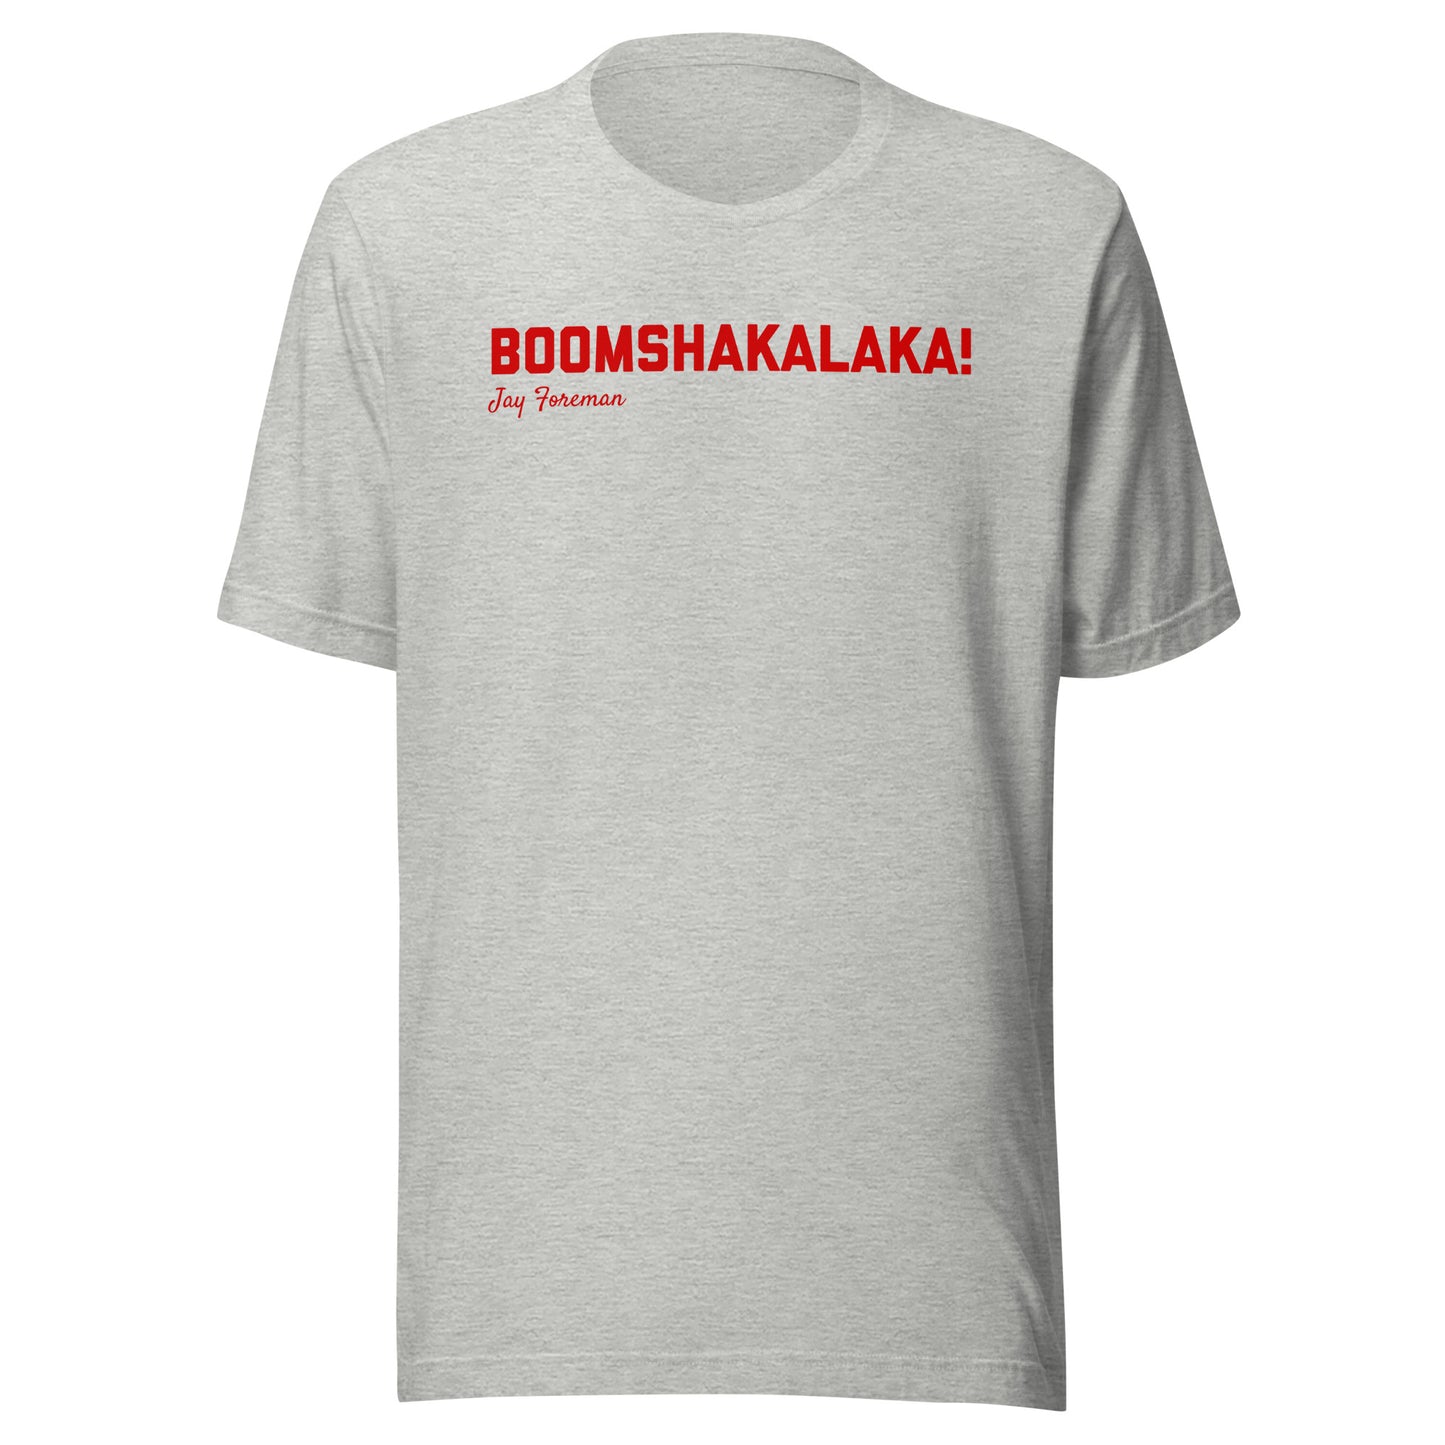 Bookshakalaka (Grey with Red Script)